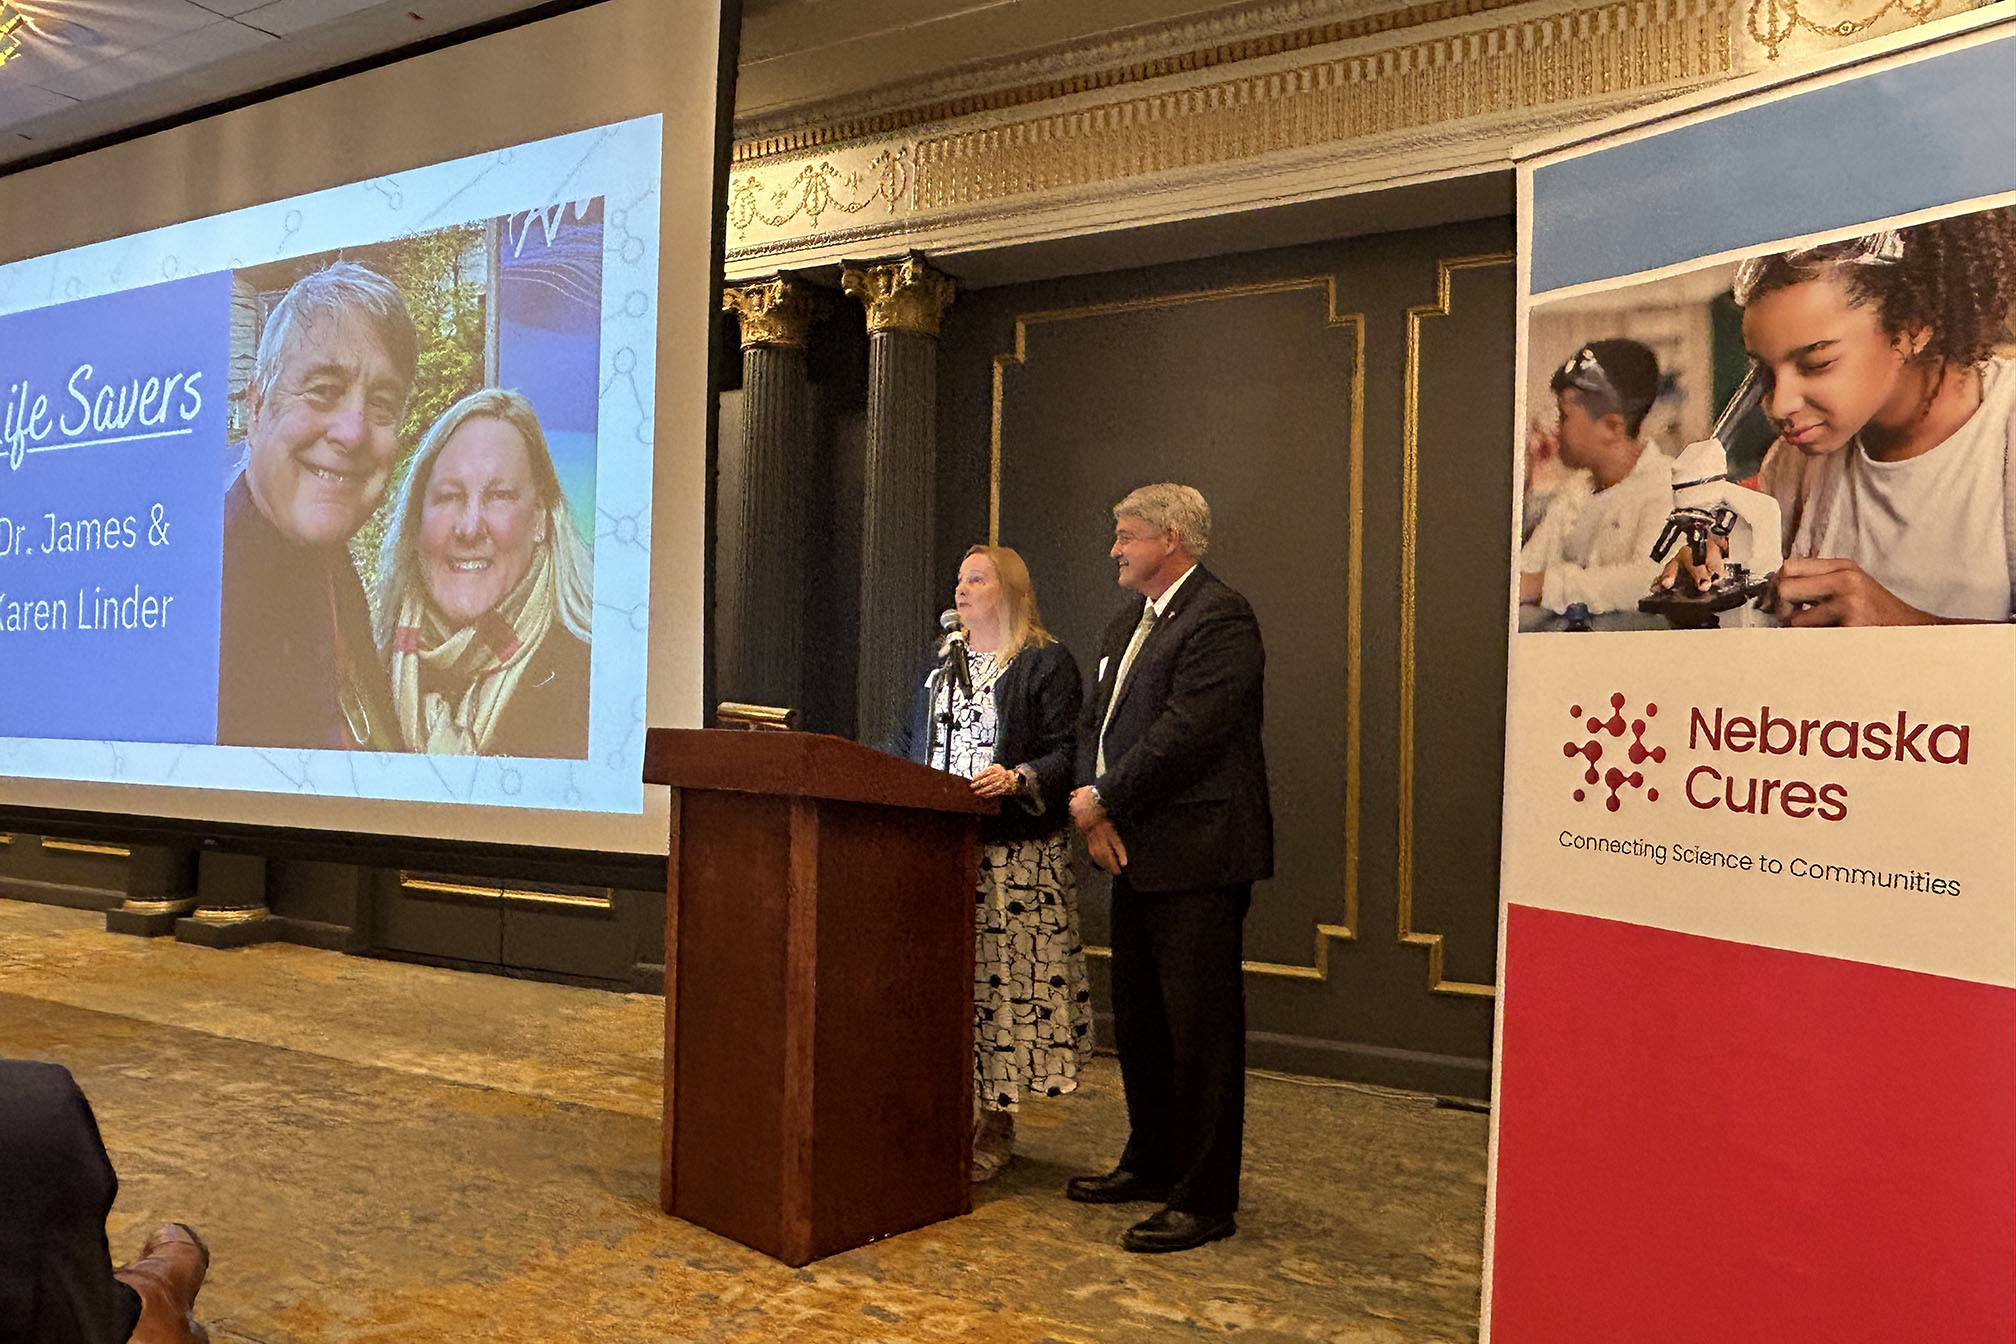 Nebraska Cures honors Jim and Karen Linder with Life Savers Award